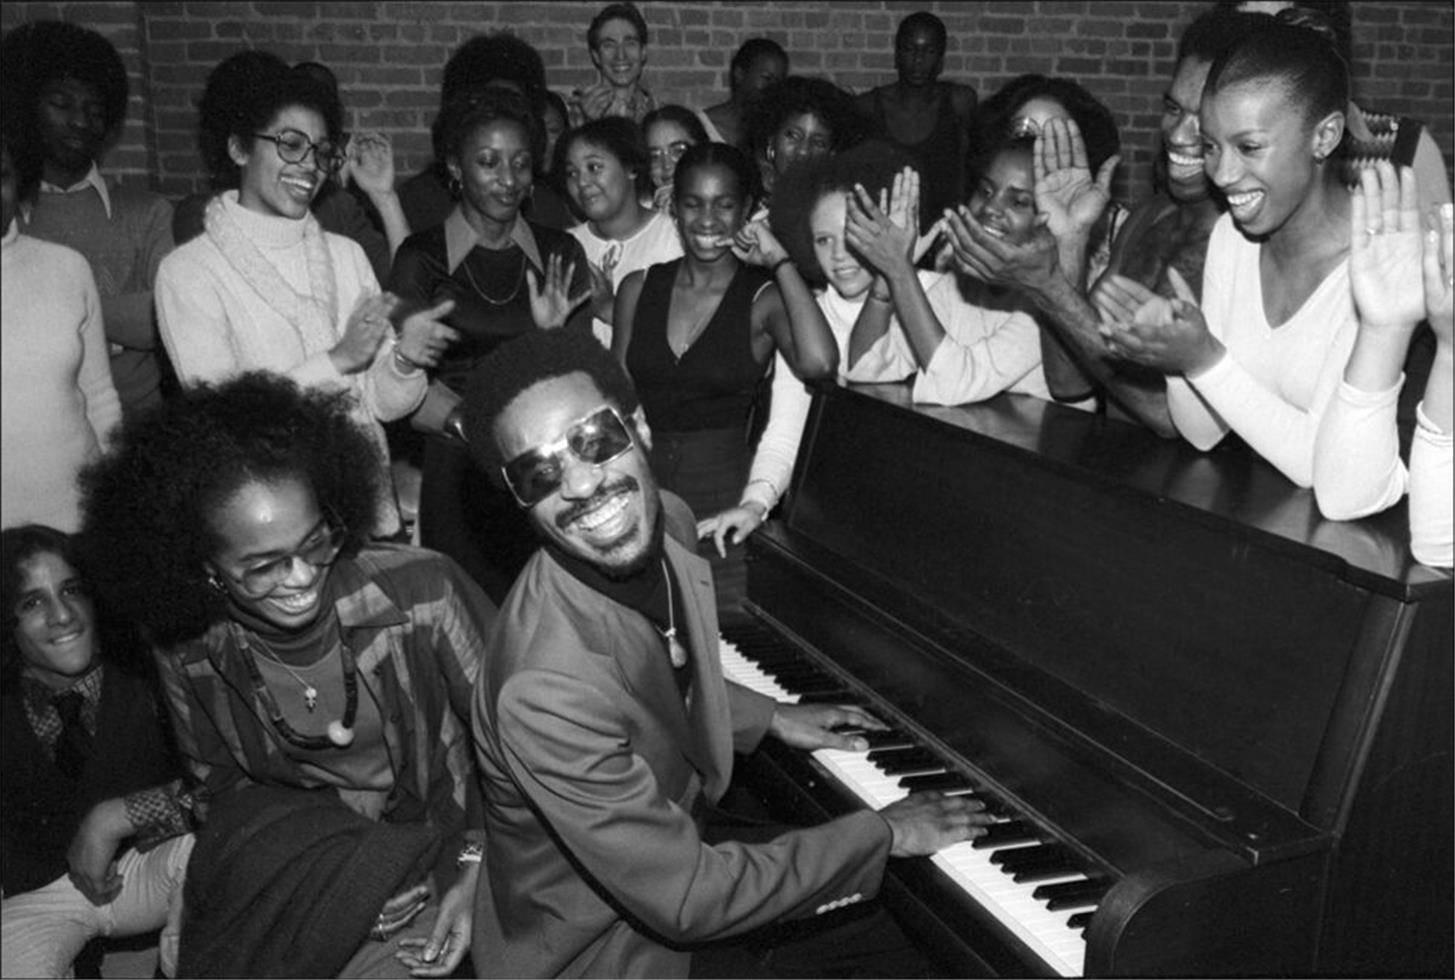 Allan Tannenbaum Black and White Photograph - Stevie Wonder at the Dance Theater of Harlem, Manhattan, December, 1976